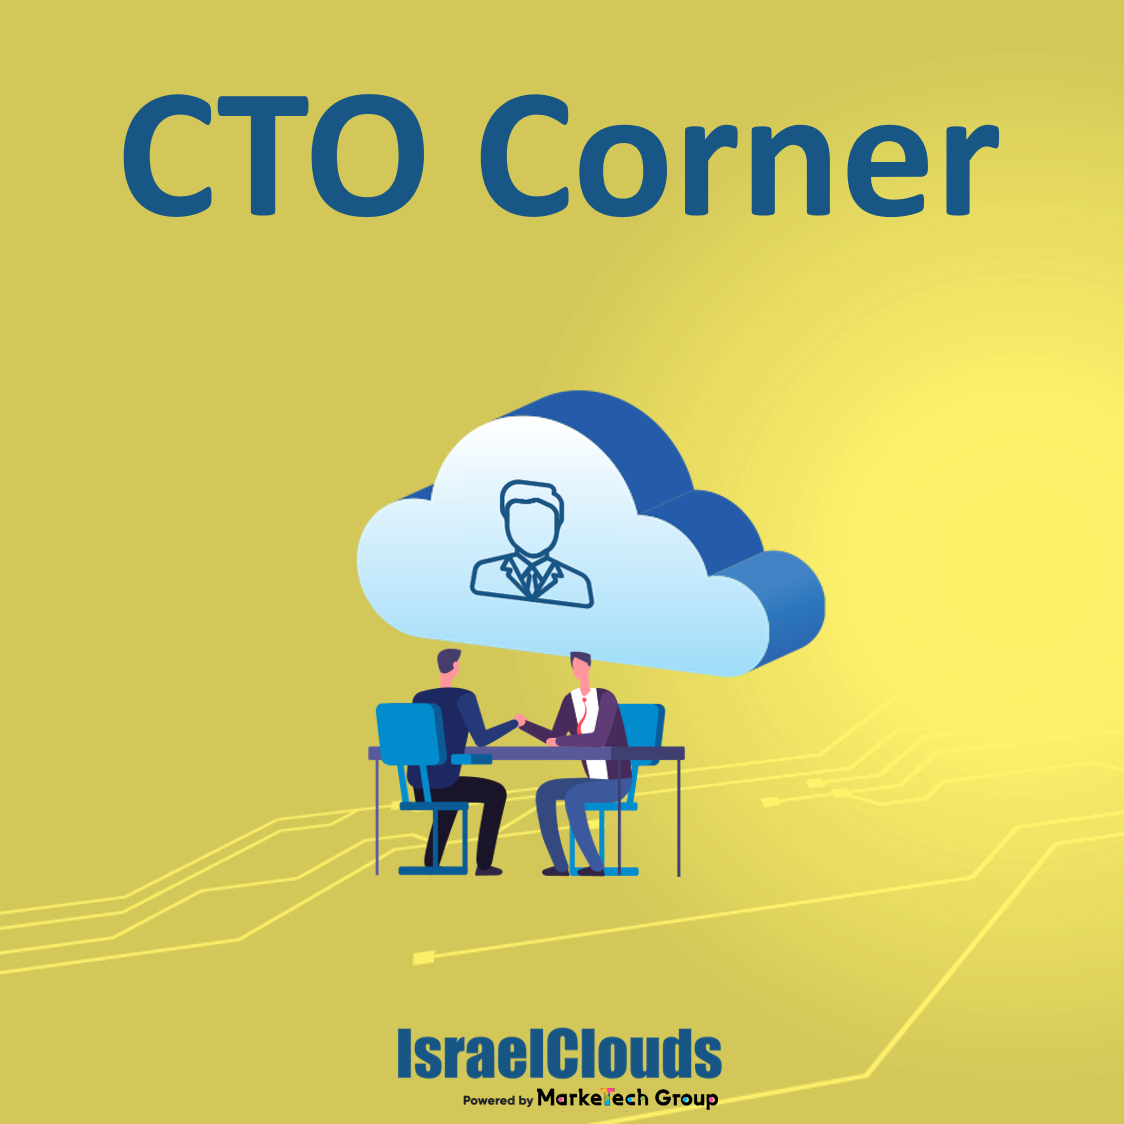 CTO Corner: Episode 22 - Cyber Prediction by sectors